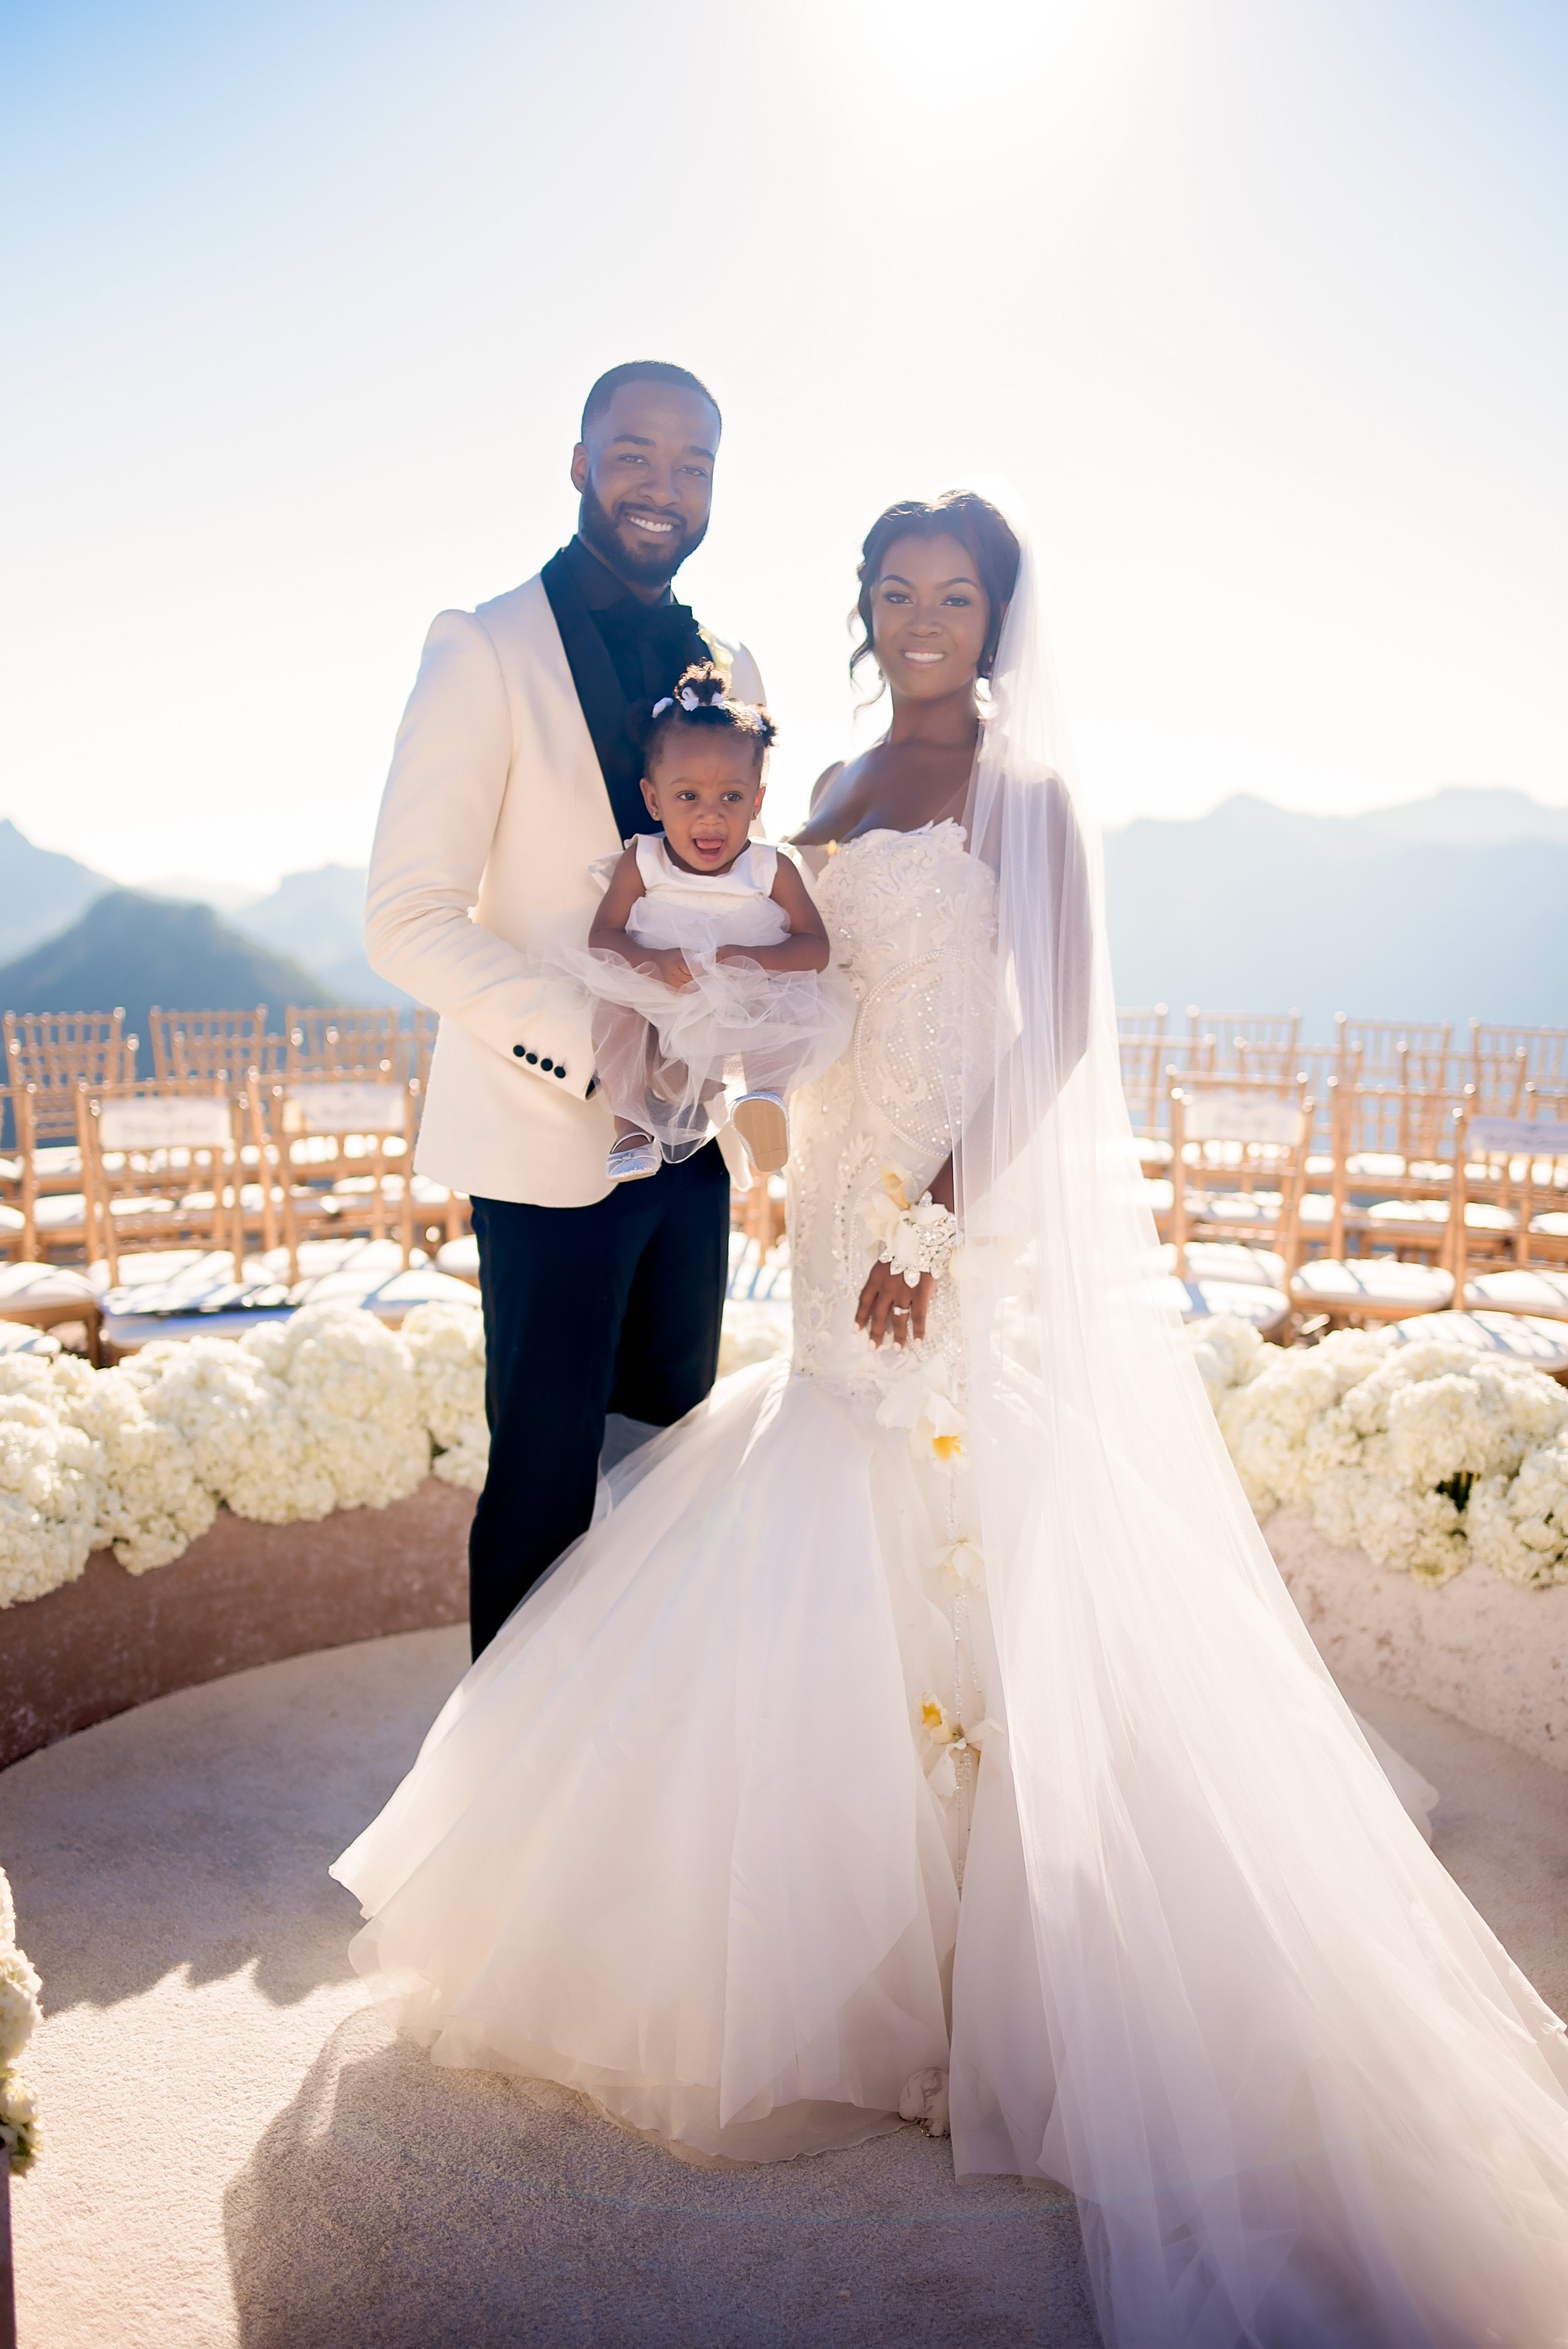 Judge Mathis' Daughter Camara's Malibu Wedding Will Simply Take Your Breath Away
